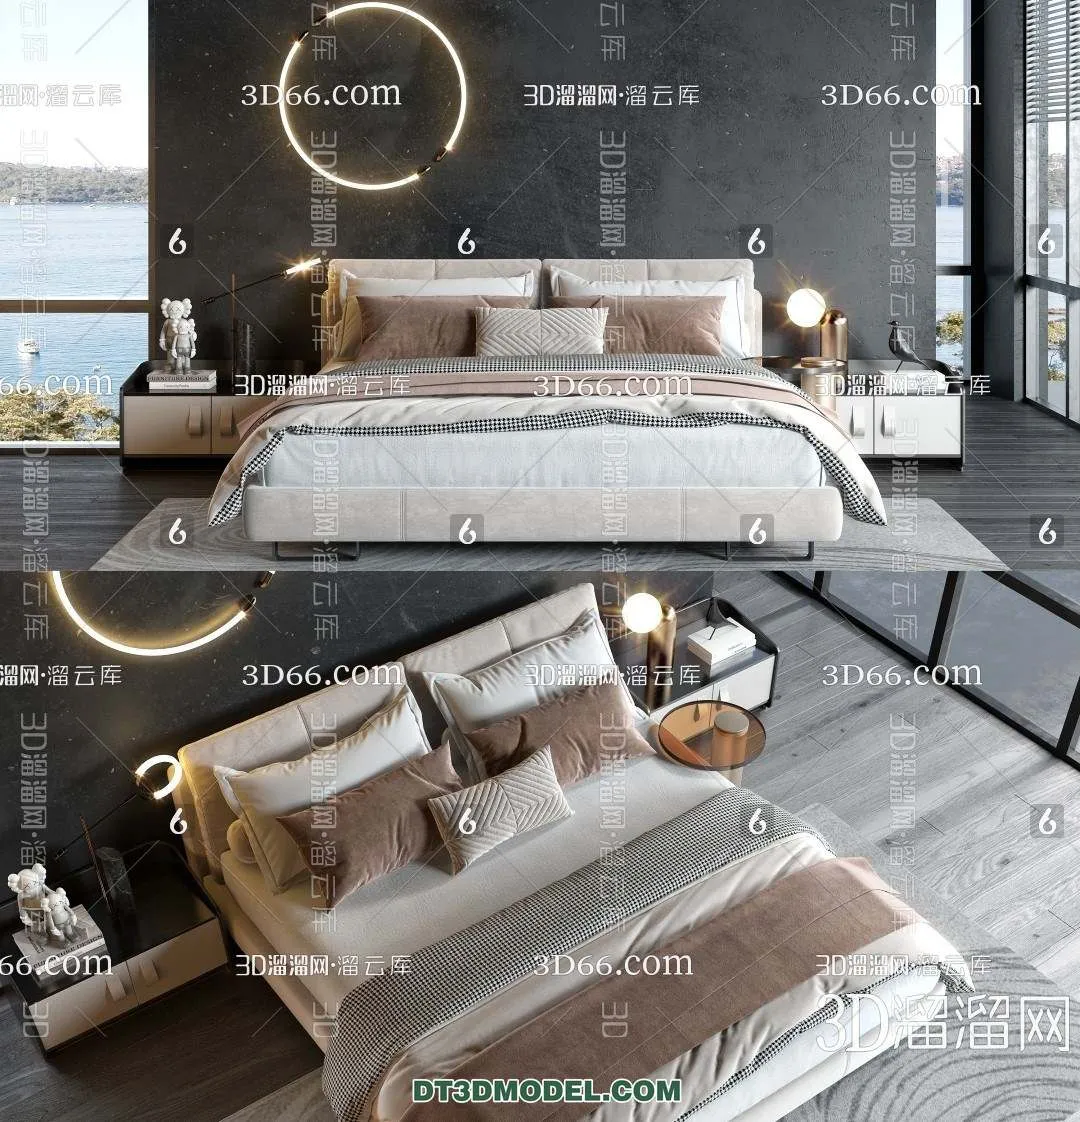 Double Bed 3D Models – 0121